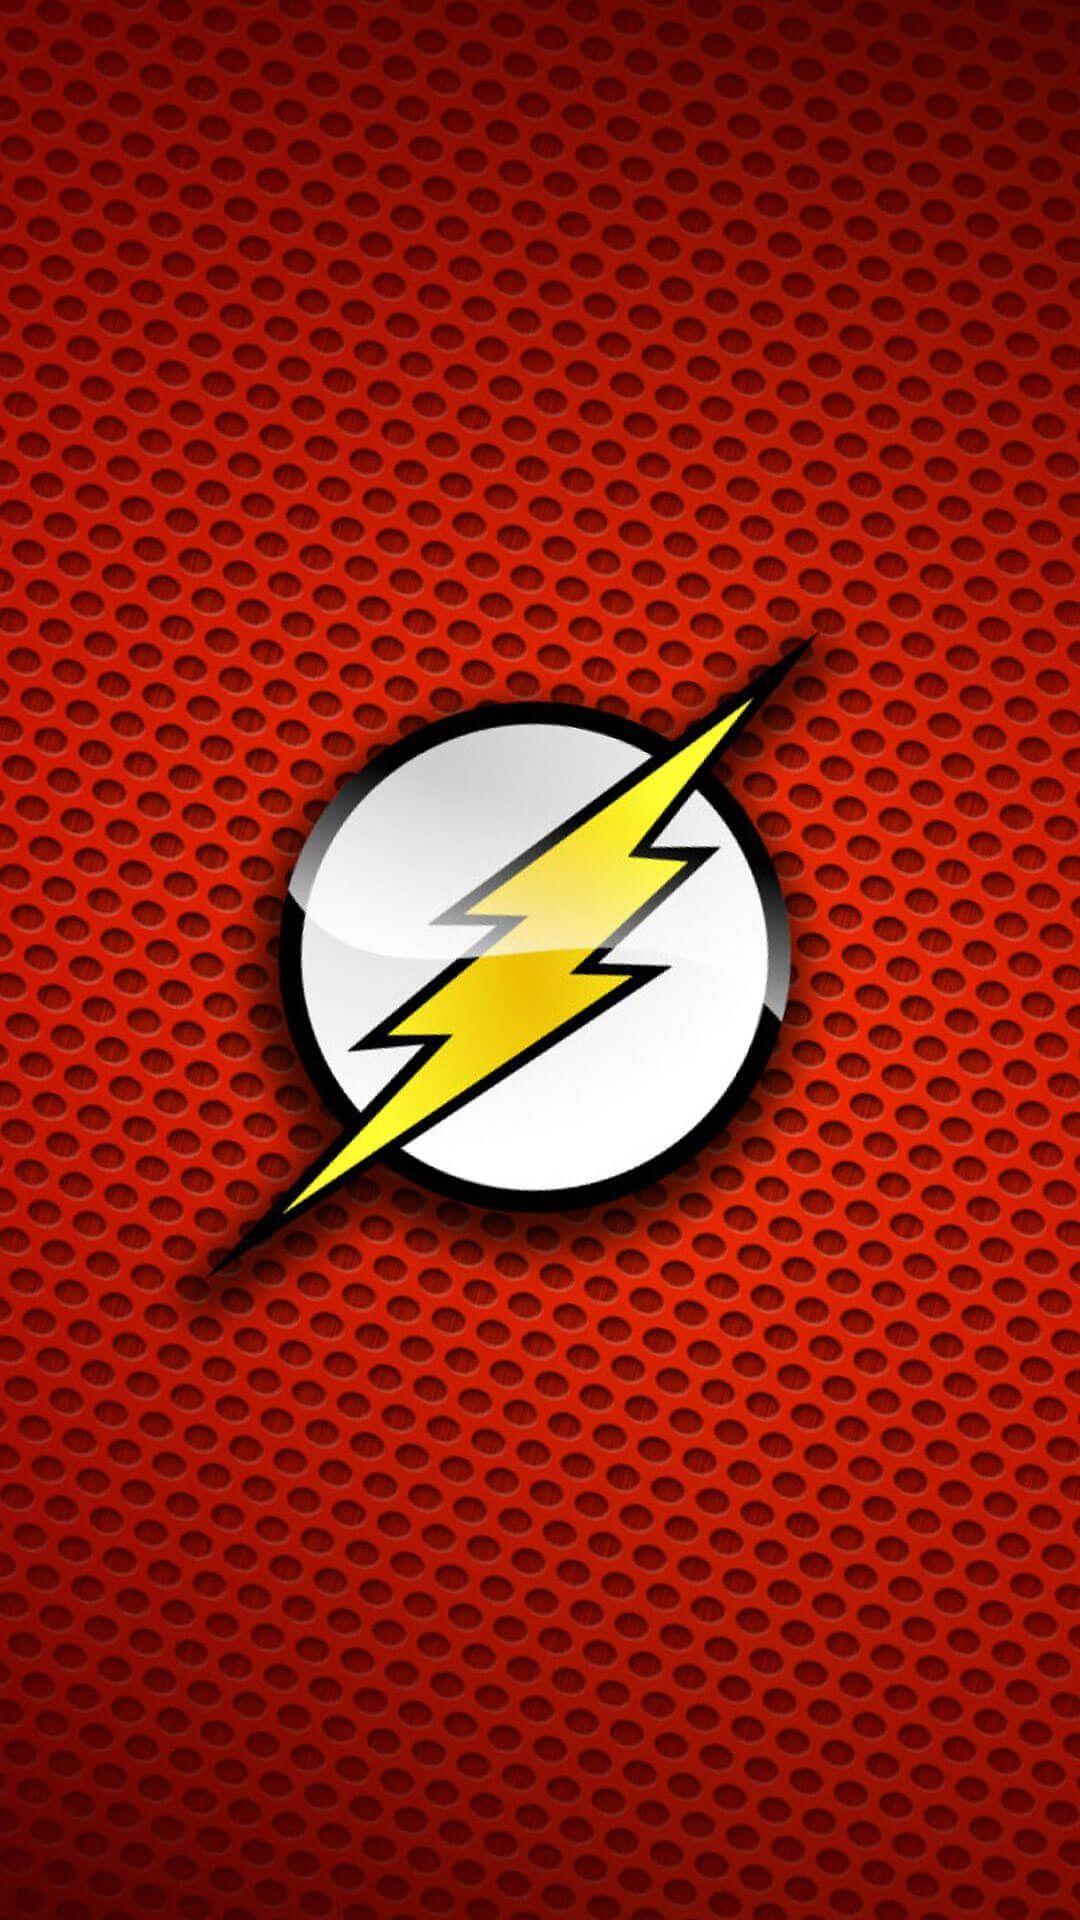 Details more than 165 the flash logo latest - camera.edu.vn